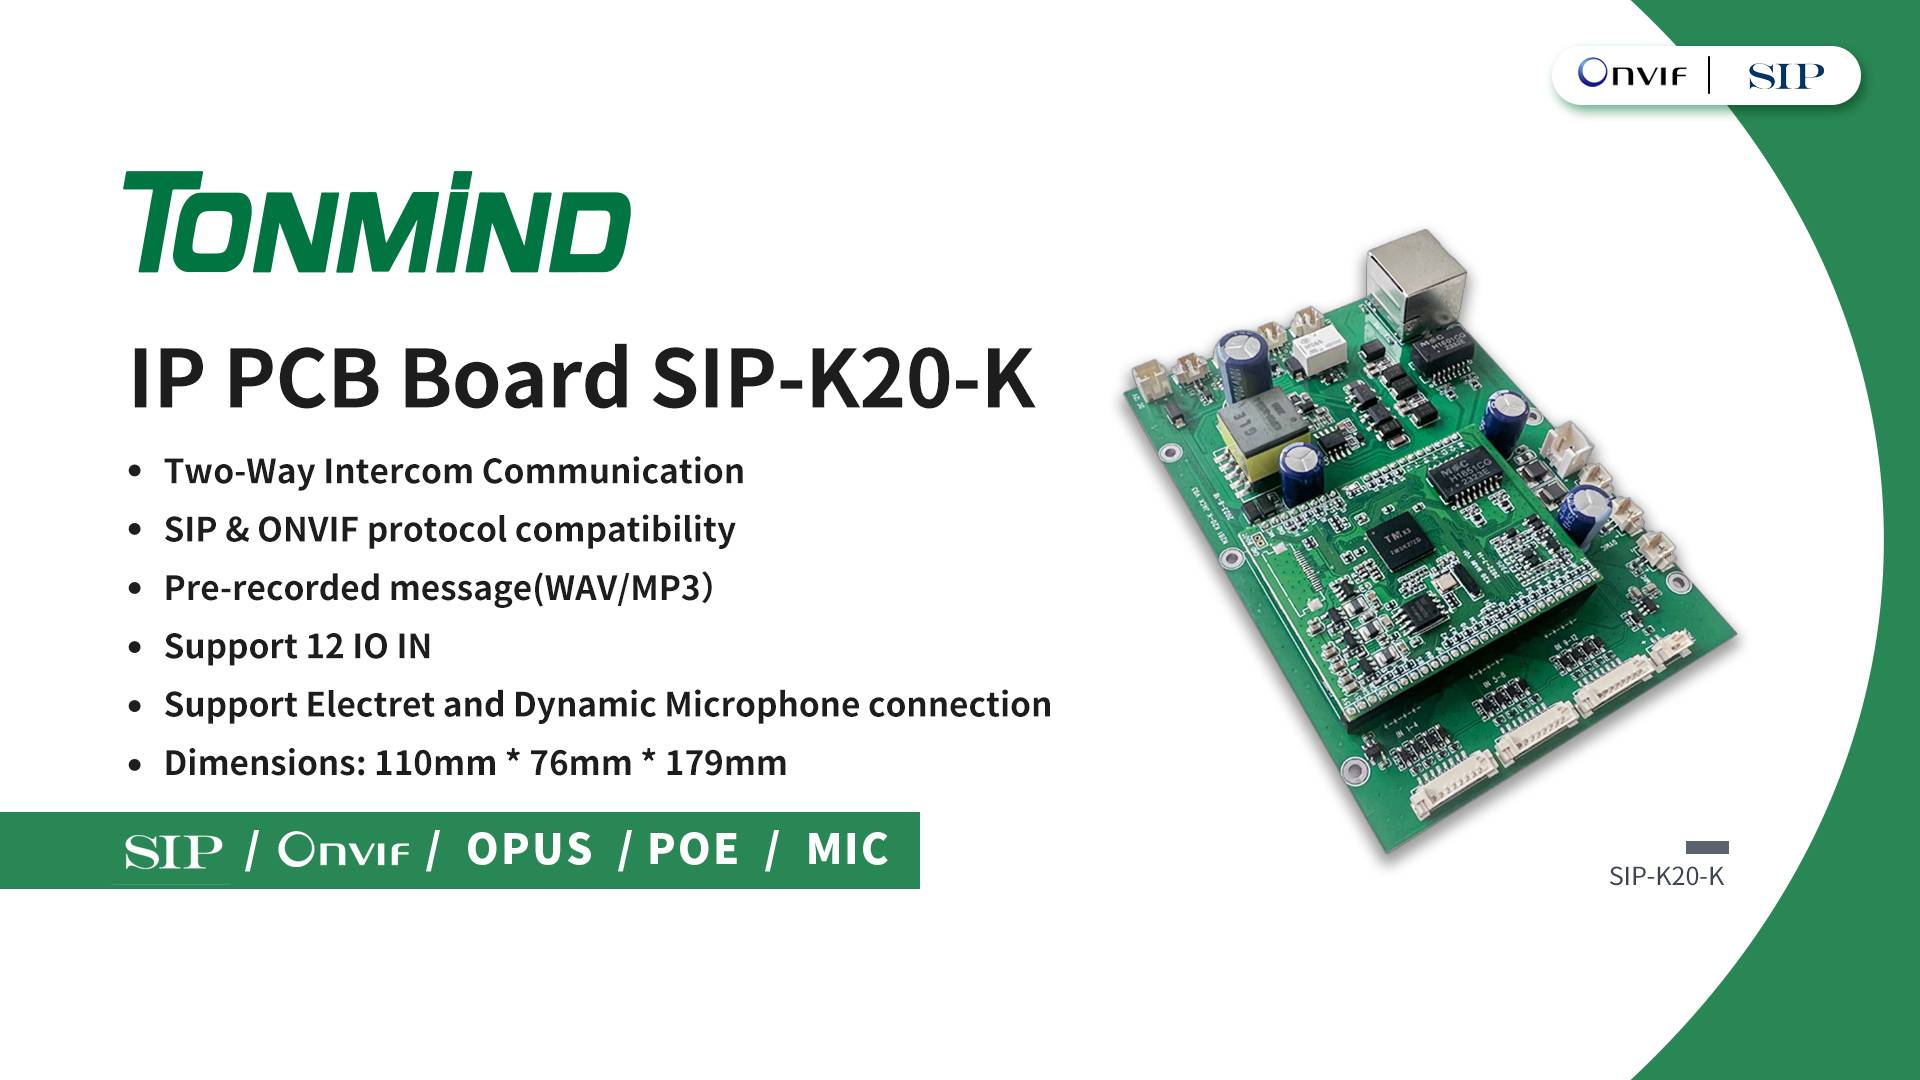 Tonmind, 향상된 통신 솔루션을 위한 신제품 IP PCB 보드 K20-K 출시